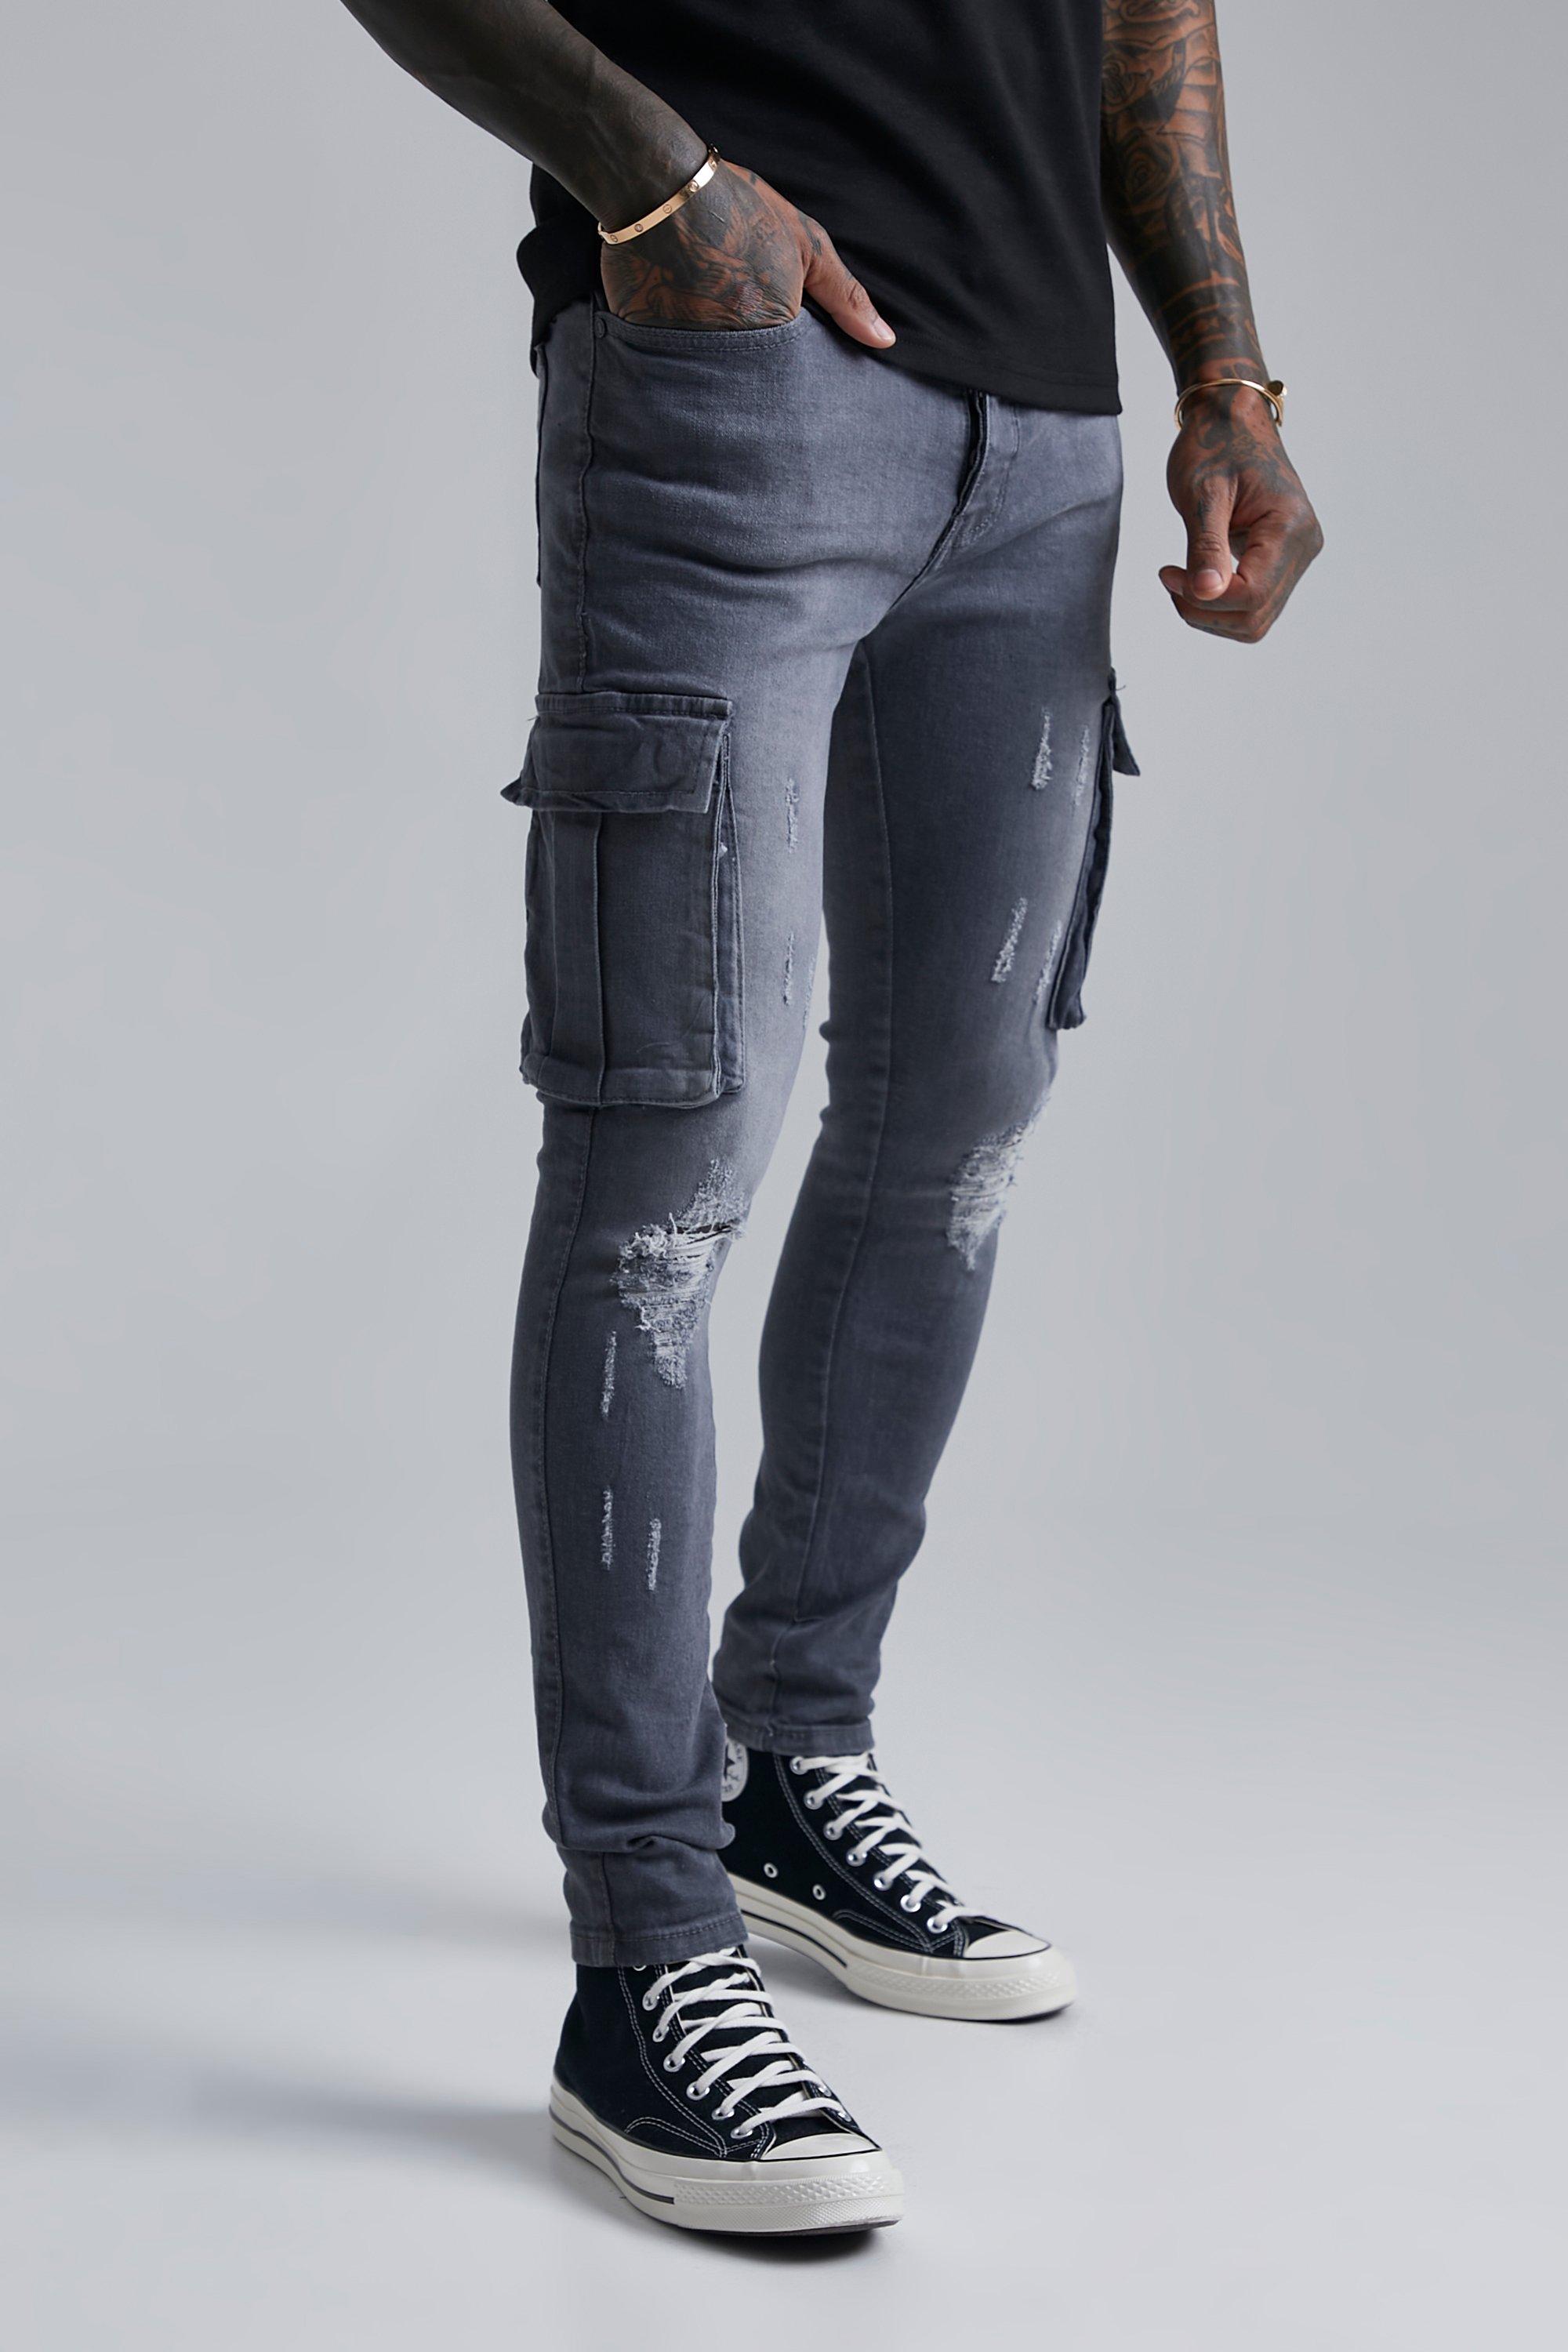 gray skinny jeans for boys